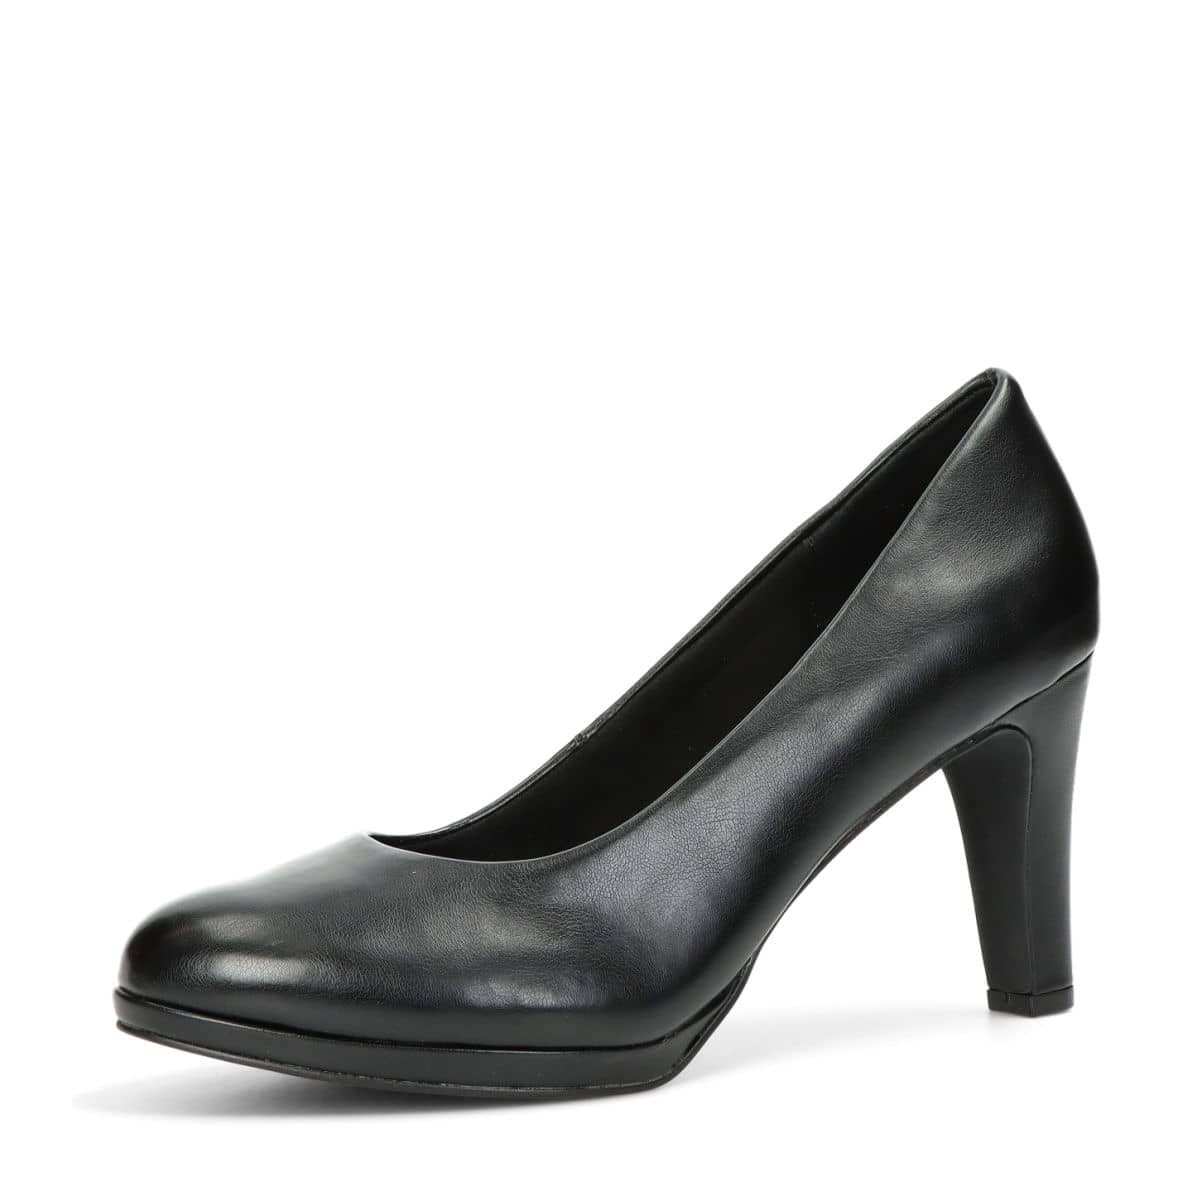 Devastate Stem Treatment Marco Tozzi damă pantofi cu toc în stil clasic - negru | Robel.shoes